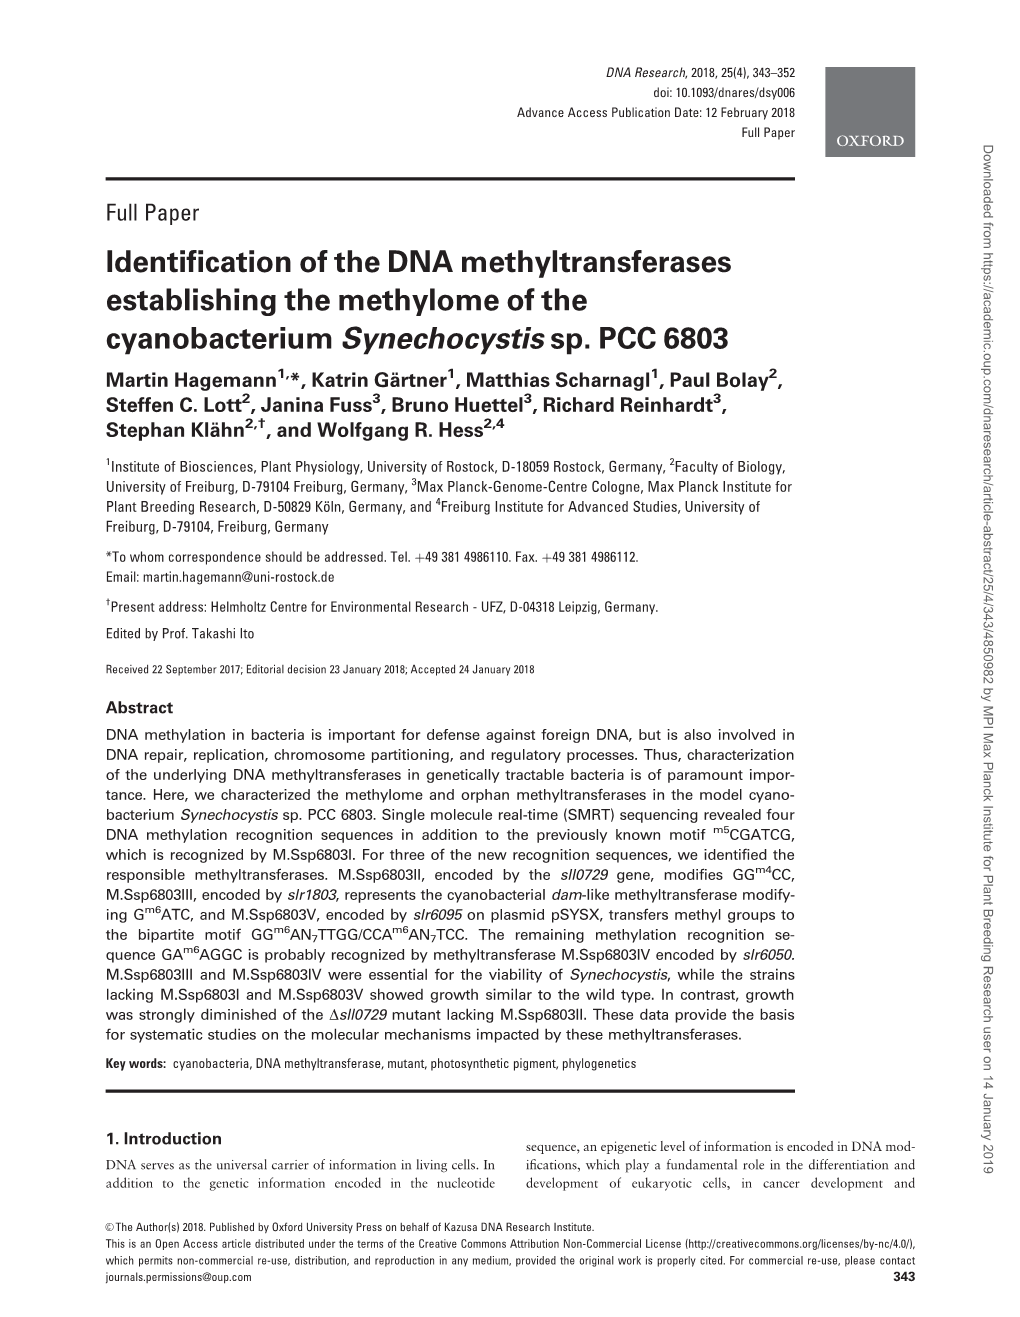 Identification of the DNA Methyltransferases Establishing the Methylome of the Cyanobacterium Synechocystis Sp